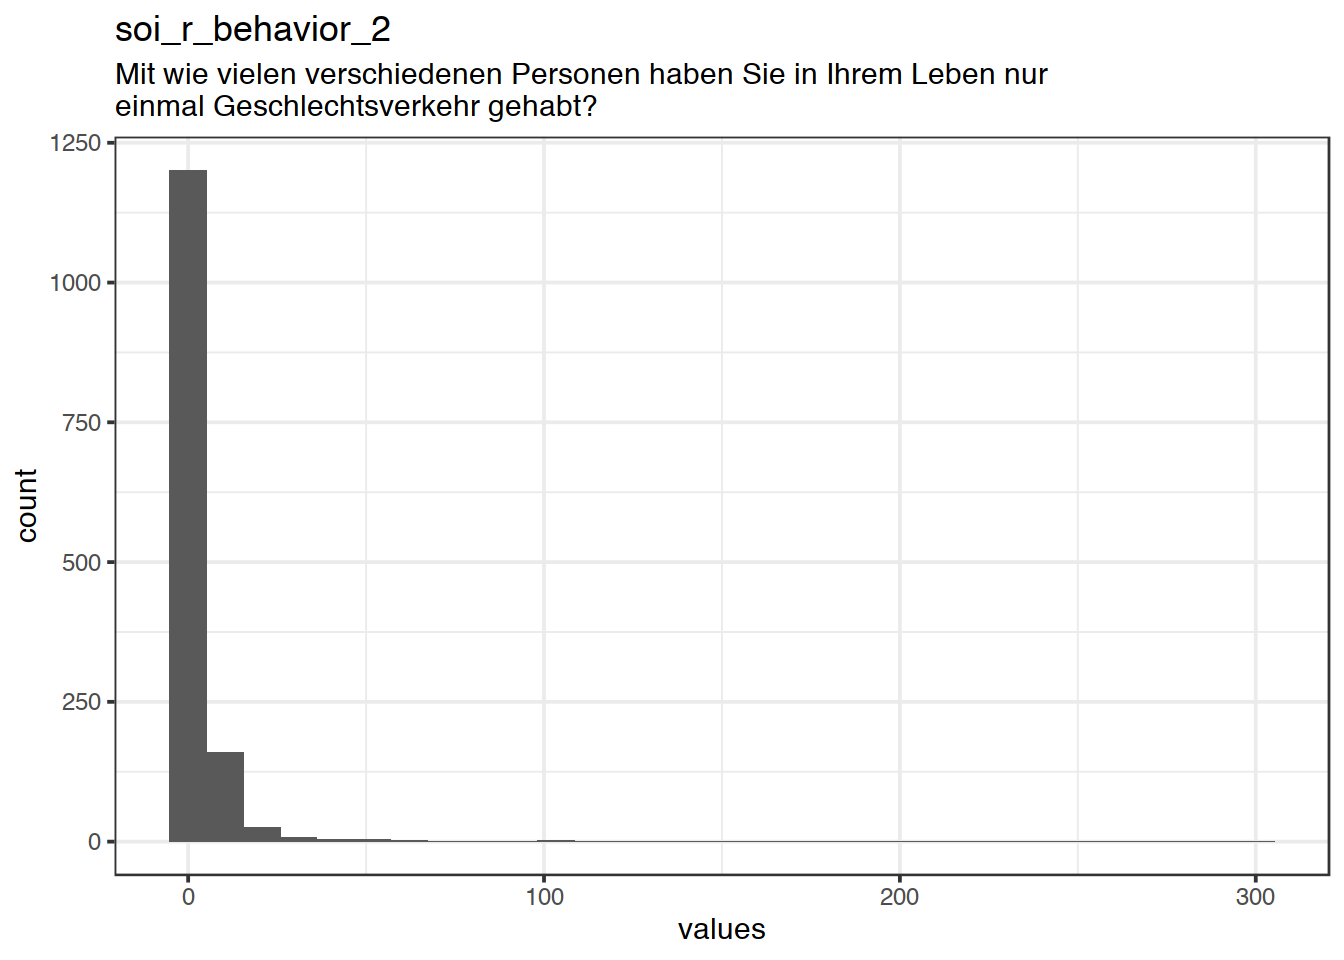 Distribution of values for soi_r_behavior_2